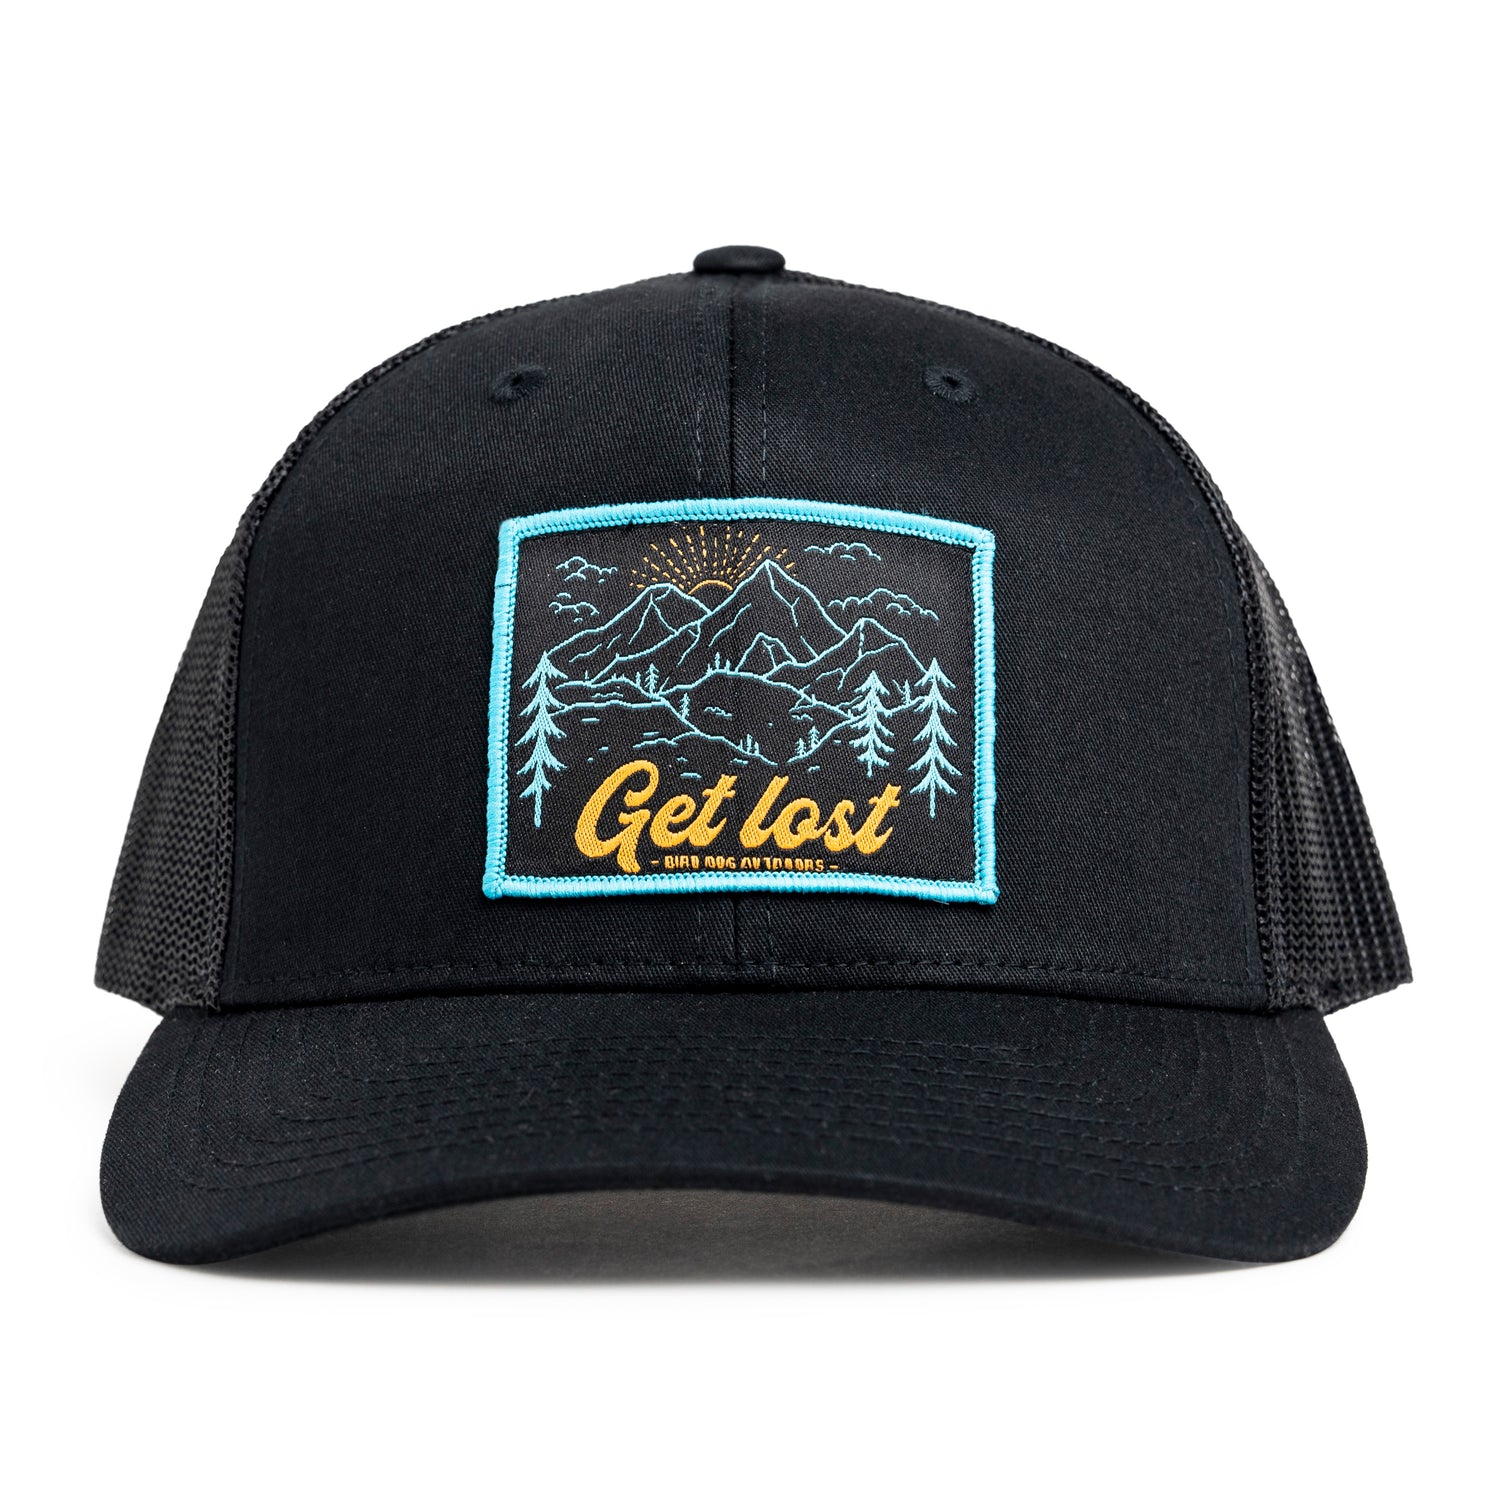 Get Lost Hat - Original